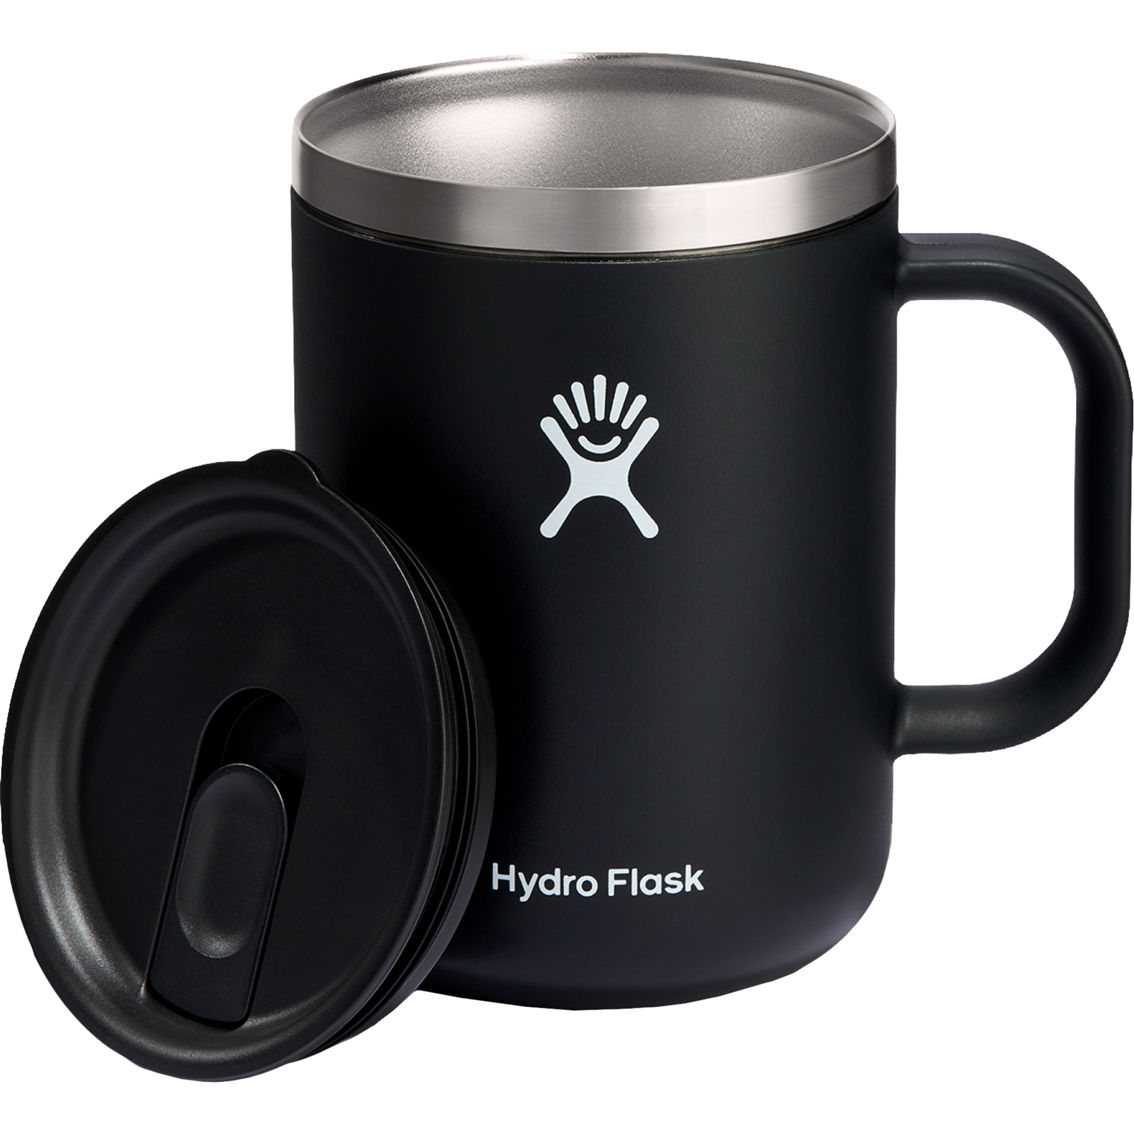 Hydro Flask Coffee Mug 24 oz. - Image 3 of 3